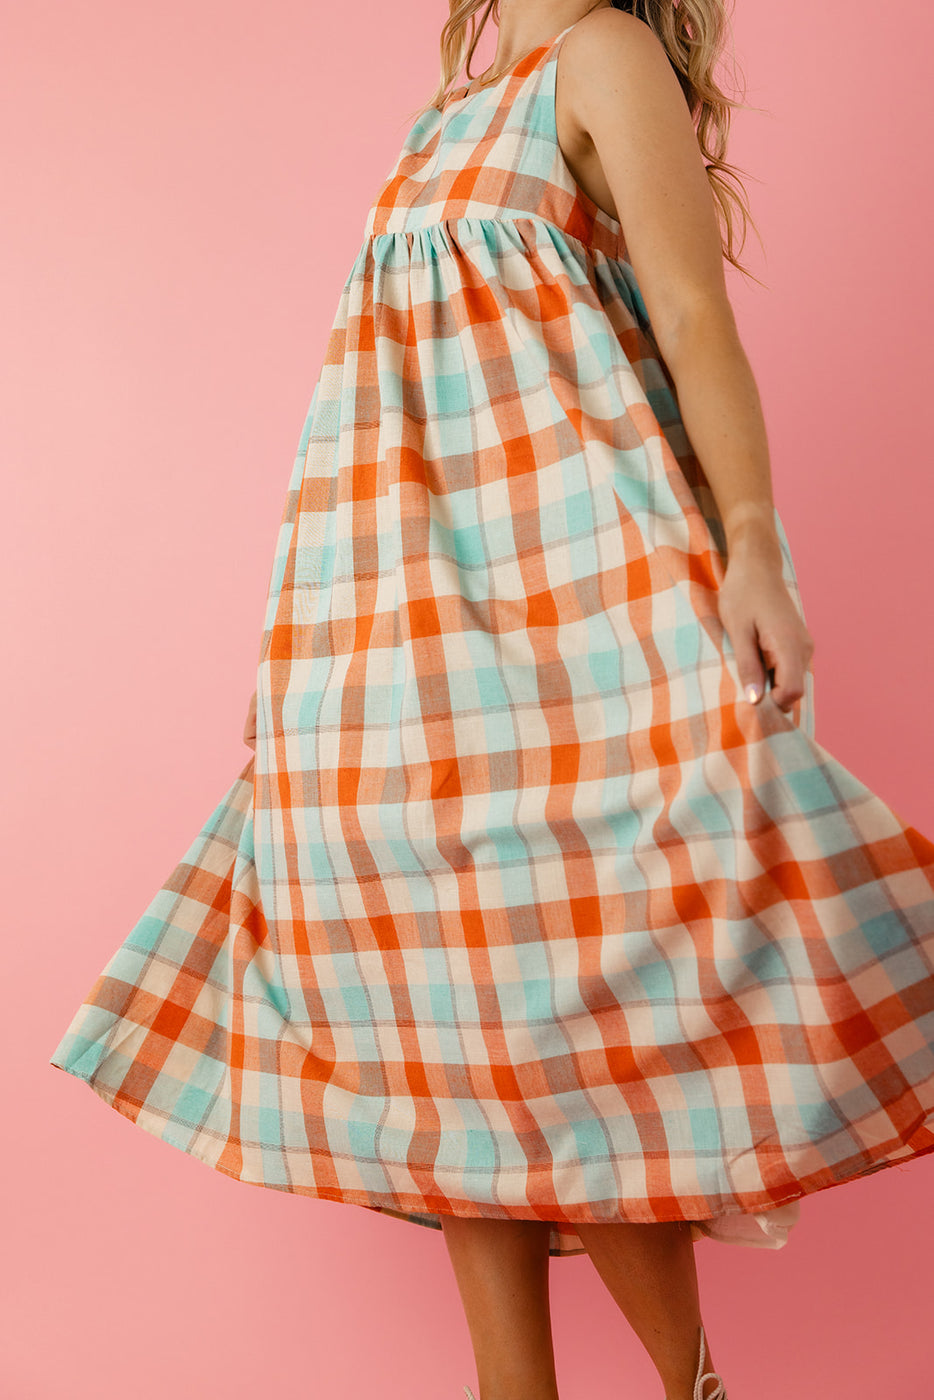 a woman wearing a plaid dress